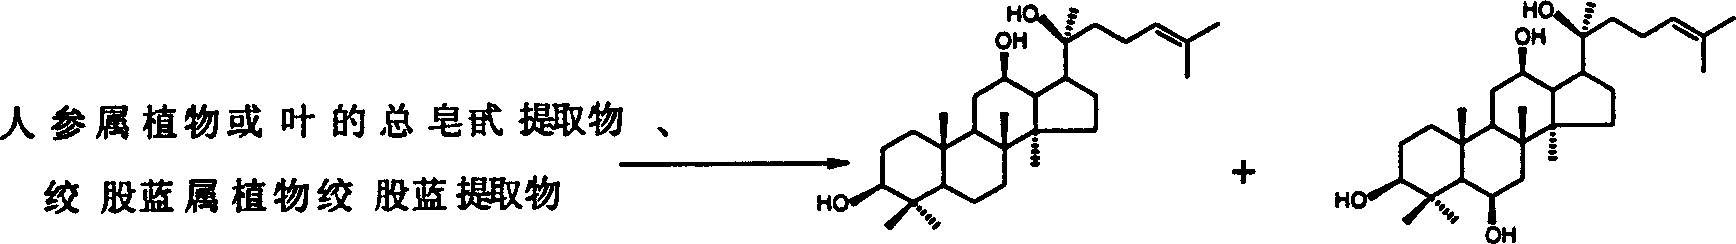 Process for preparing protopanoxadiol and protopanaxatriol